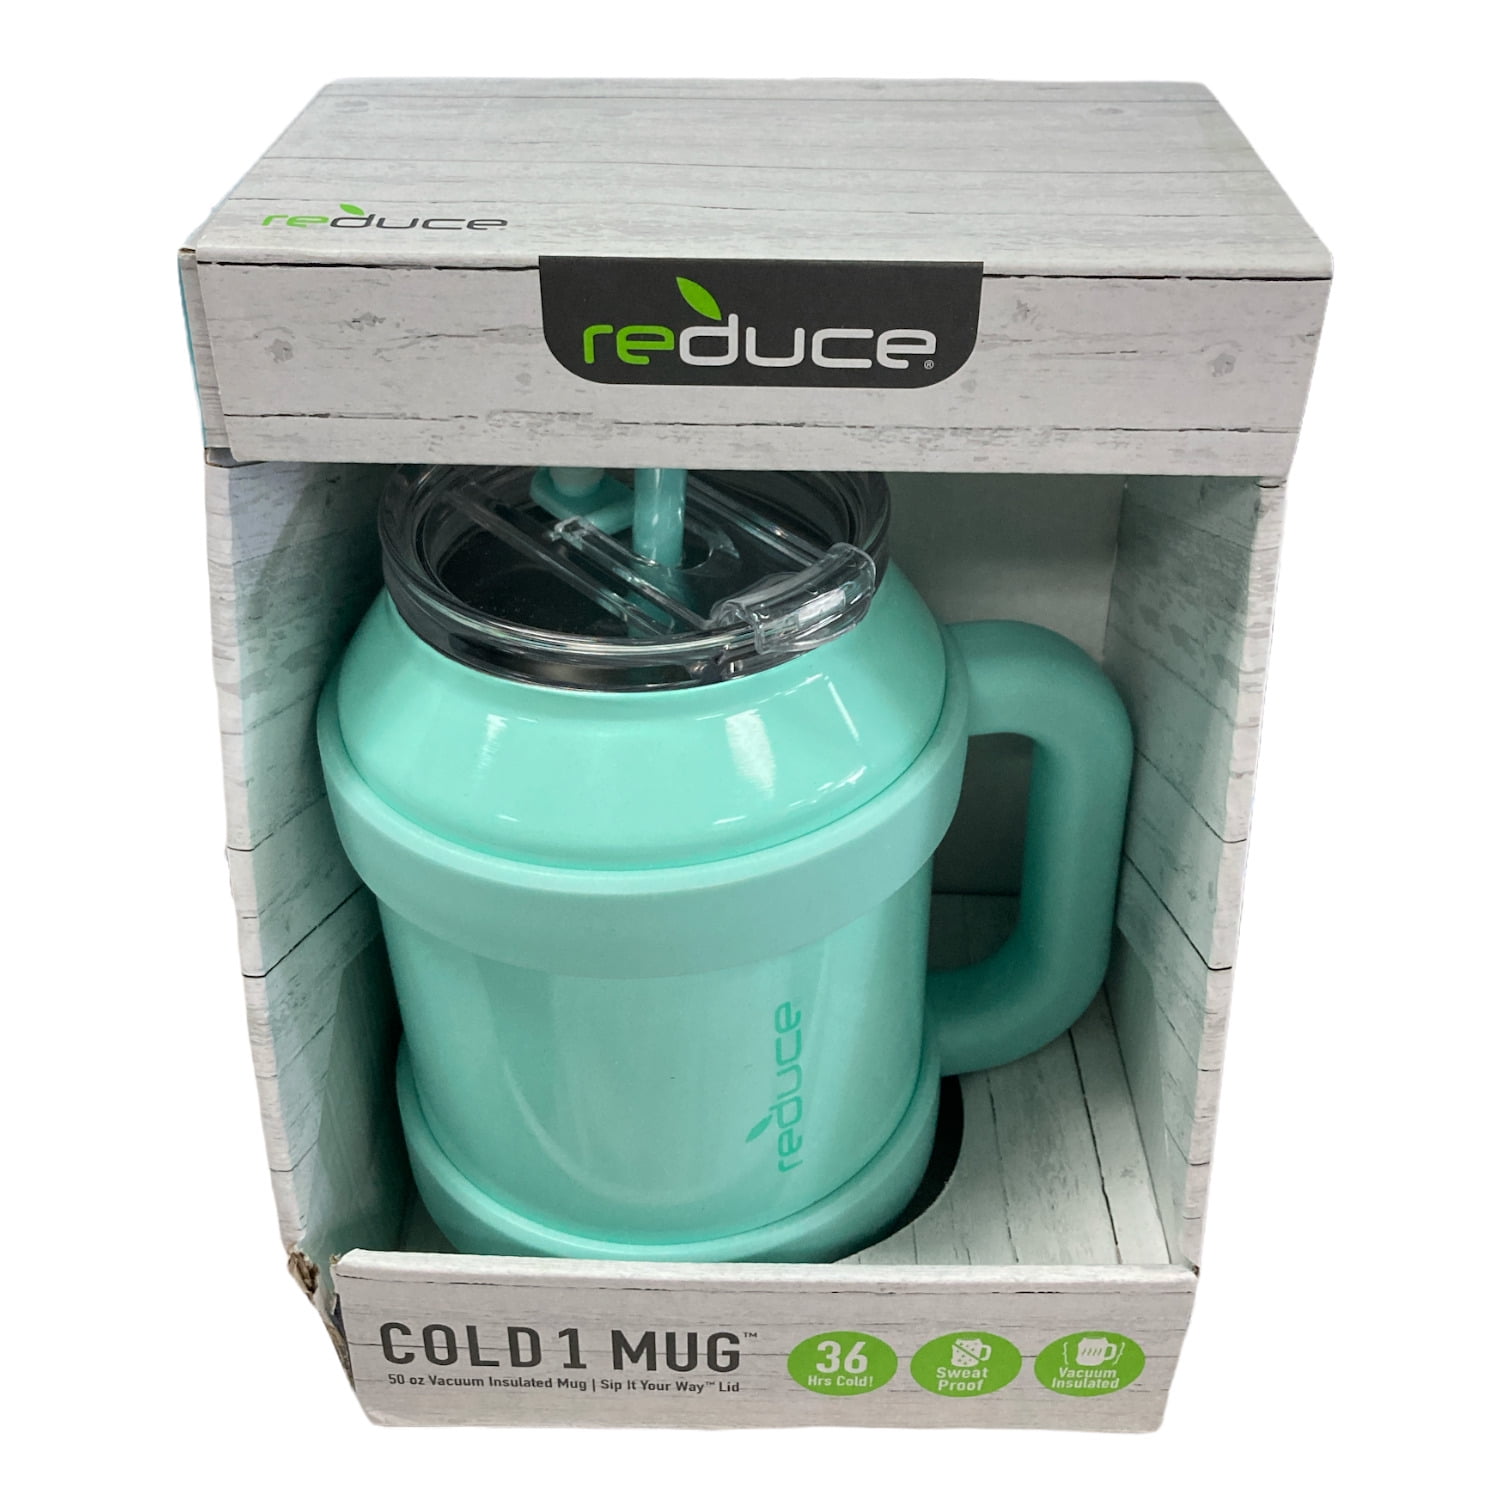 Reduce Cold1 50 oz. Mug Mint - HapyDeals